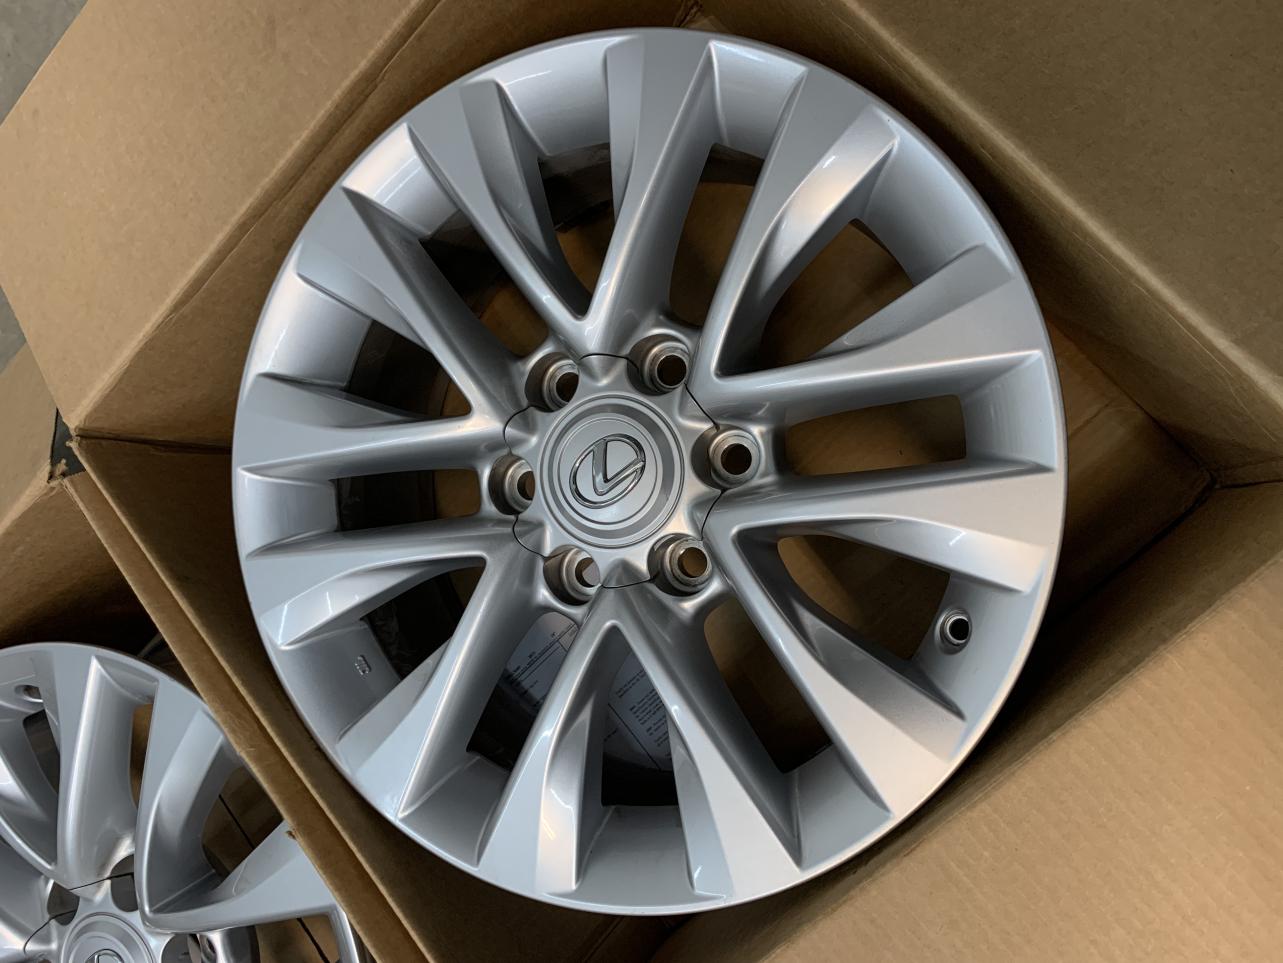 FS: Lexus GX460 Premium Wheels (Fits 4runner, tacoma) - Bay Area, CA-img_2746-jpg